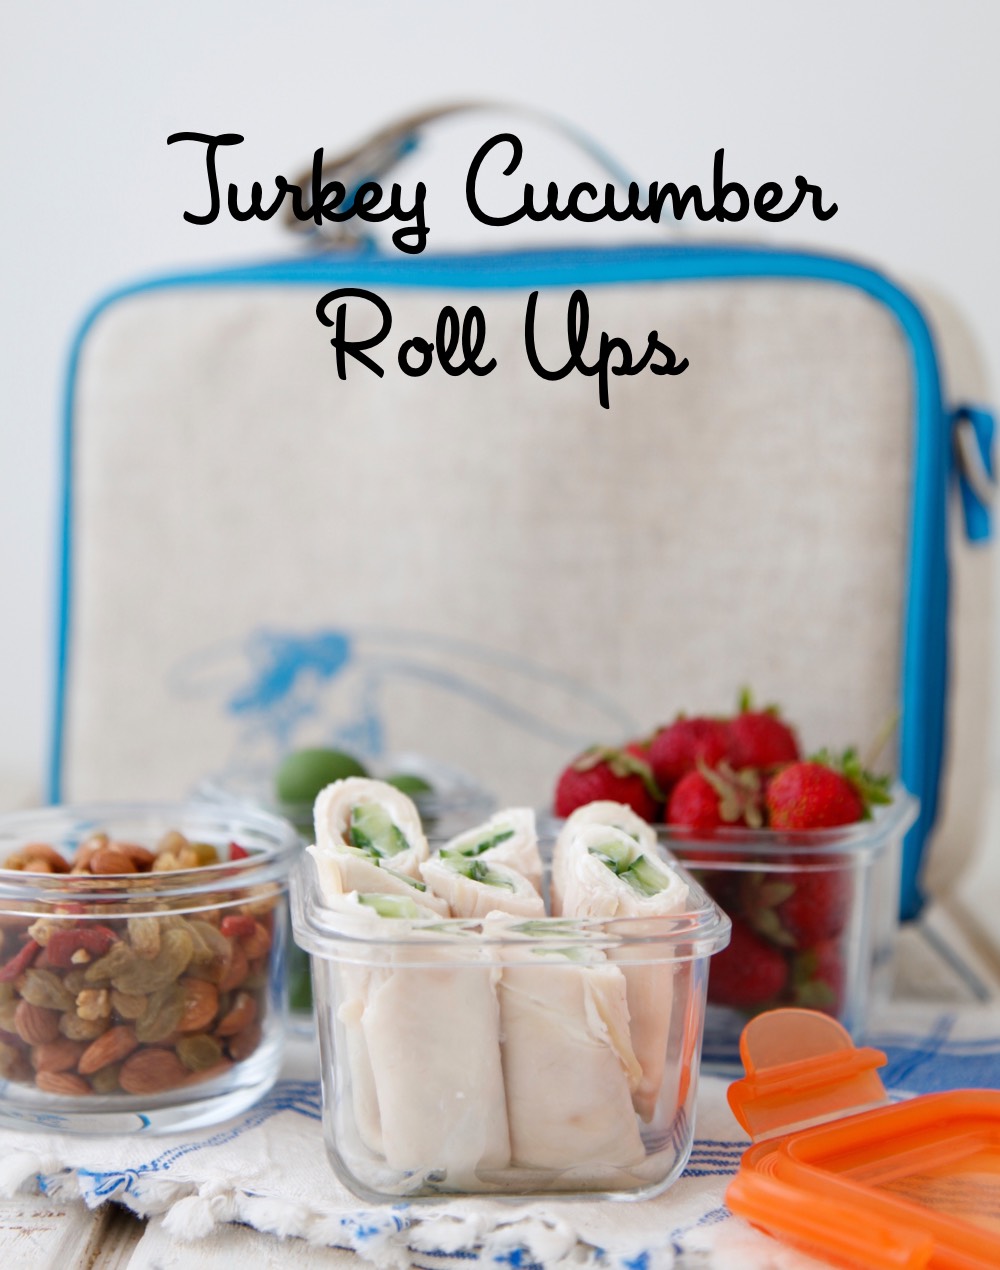 Turkey Cucumber Roll Ups from weelicious.com